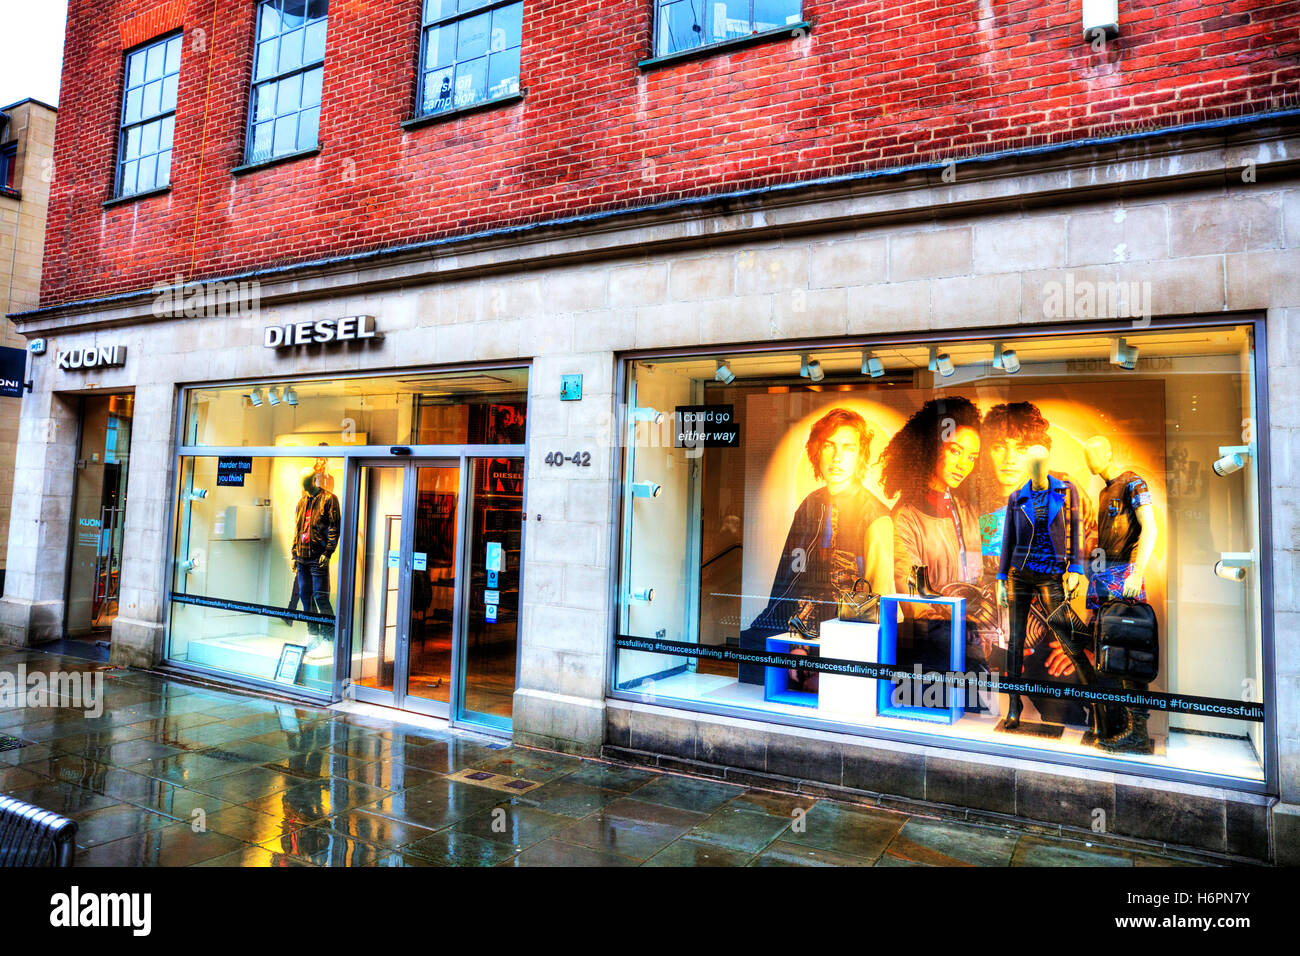 Diesel clothes shop clothing store high street shops Nottingham UK GB ...